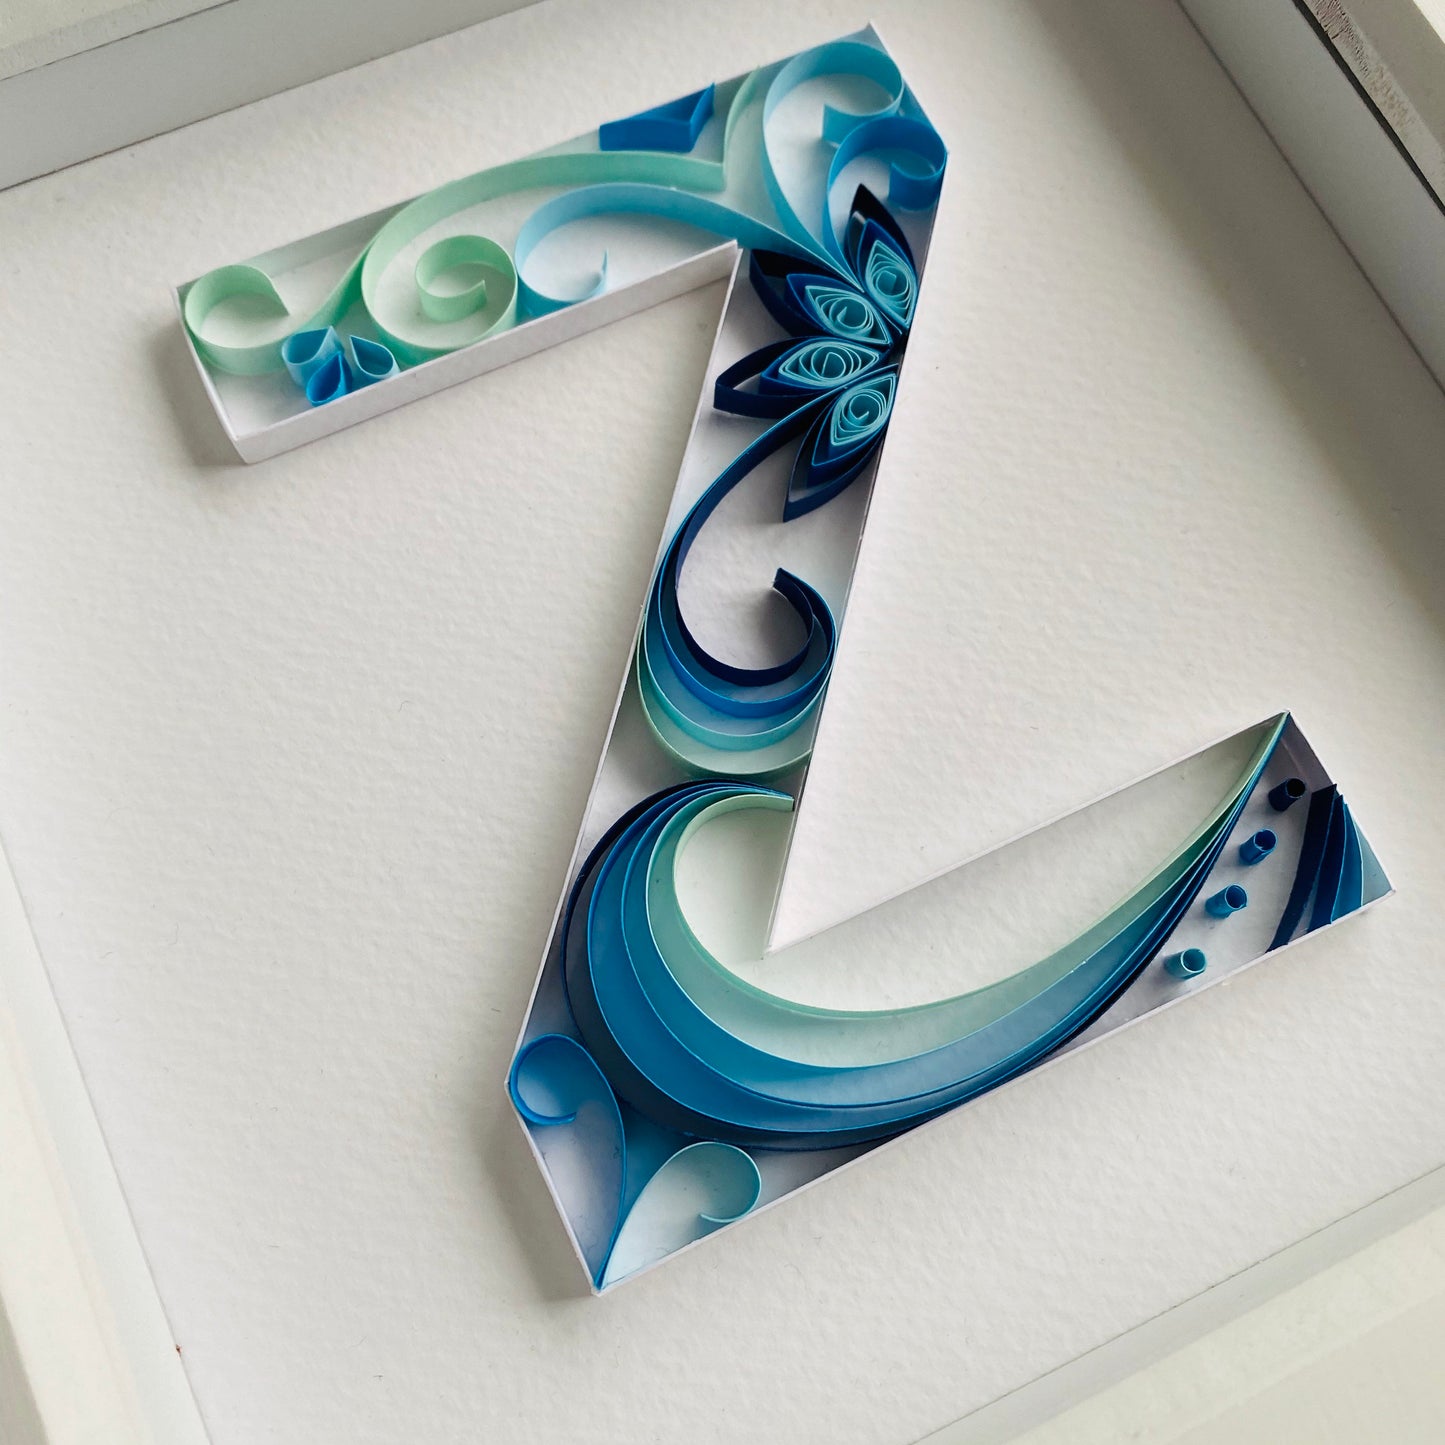 Blue Quilled Letter Box Frame